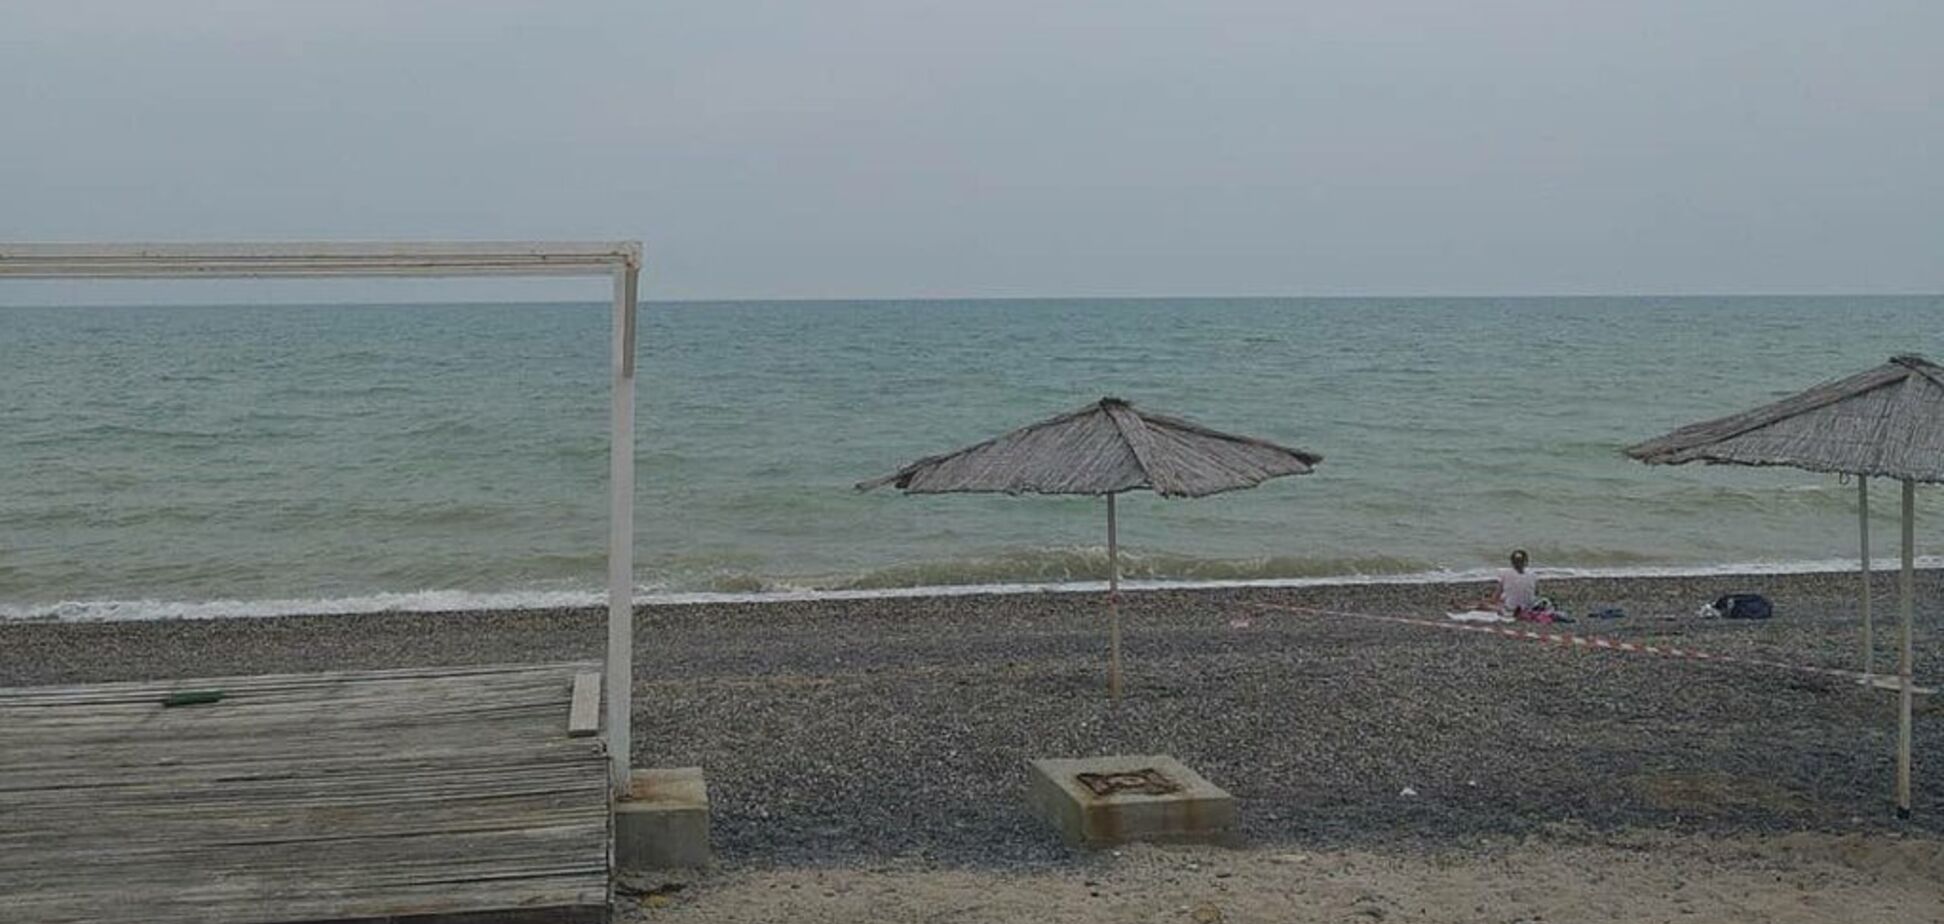 Разгар курортного сезона в Крыму попал на фото